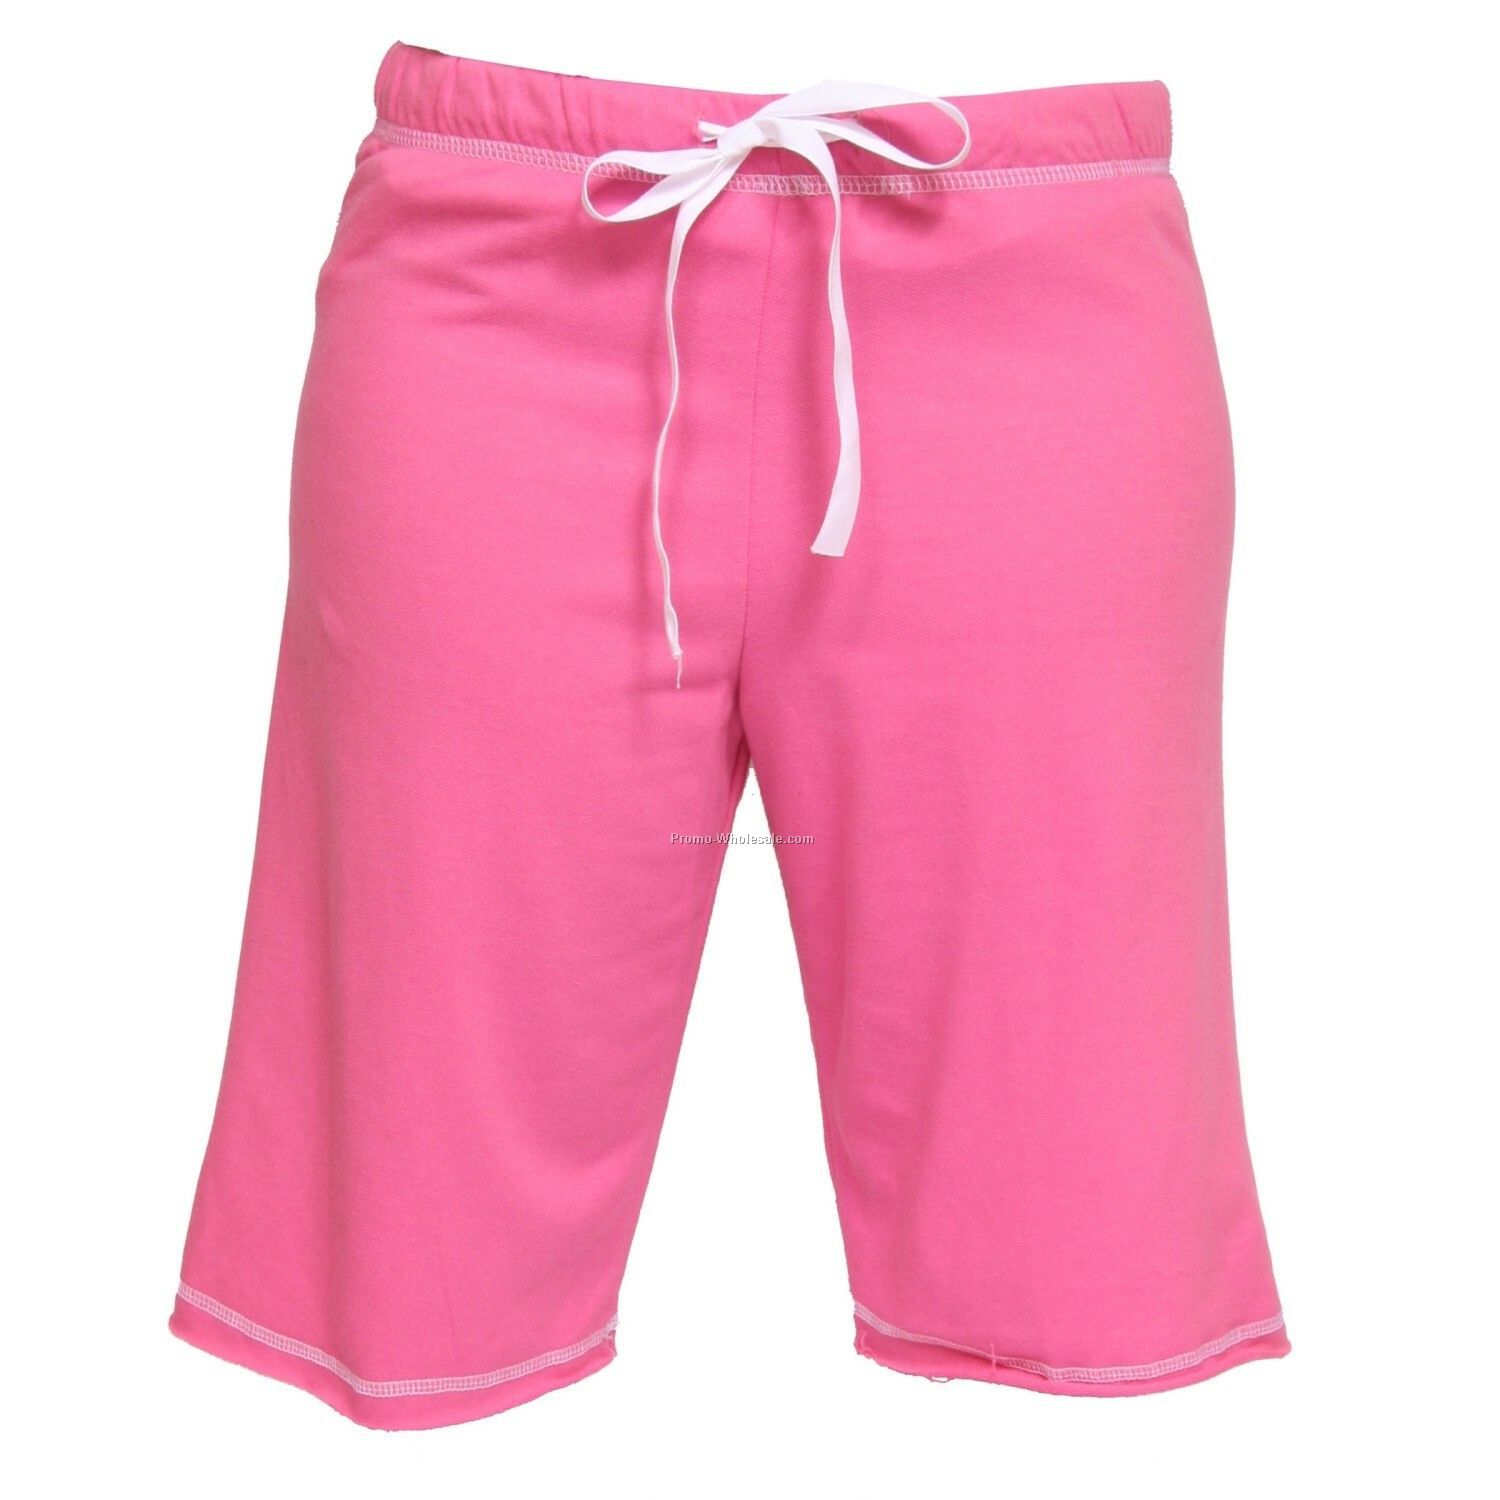 Adults' Pink Board Shorts (Xs-xl)